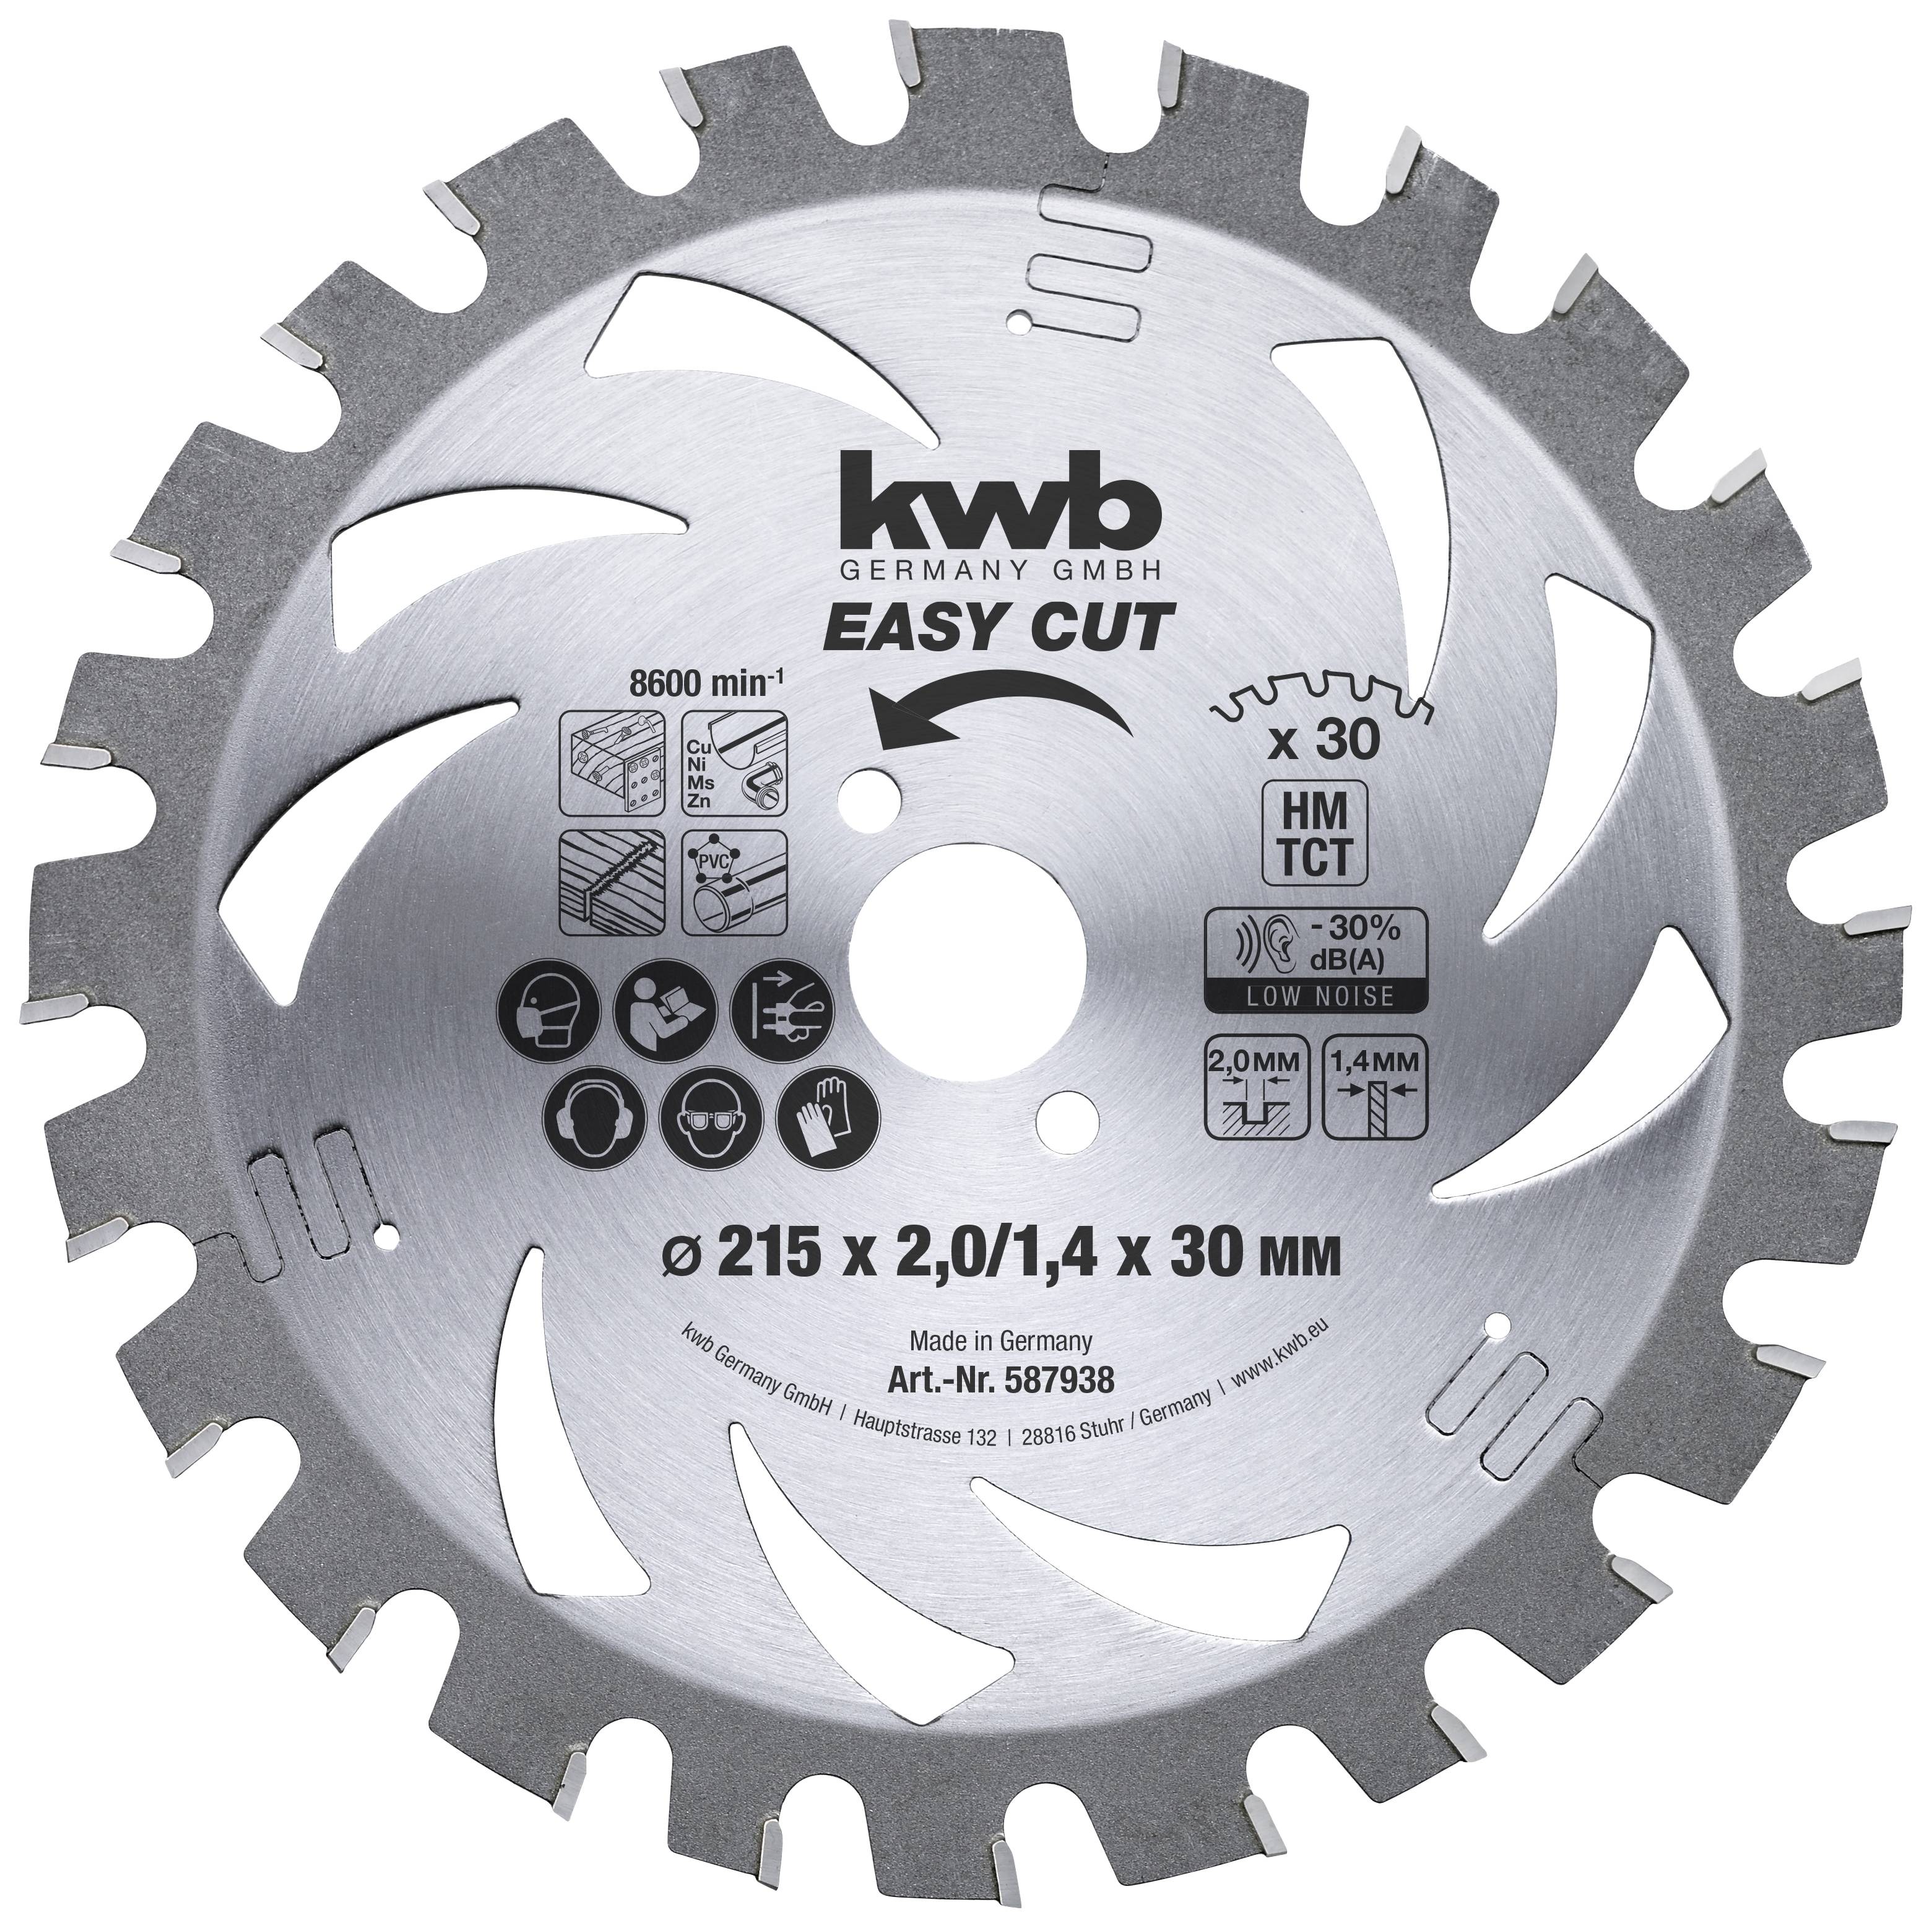 KWB 587938 - Aluminium - Spanholzplatte - Hartholz - Nicht-eisenhaltiges Metall - Kunststoff - Blech